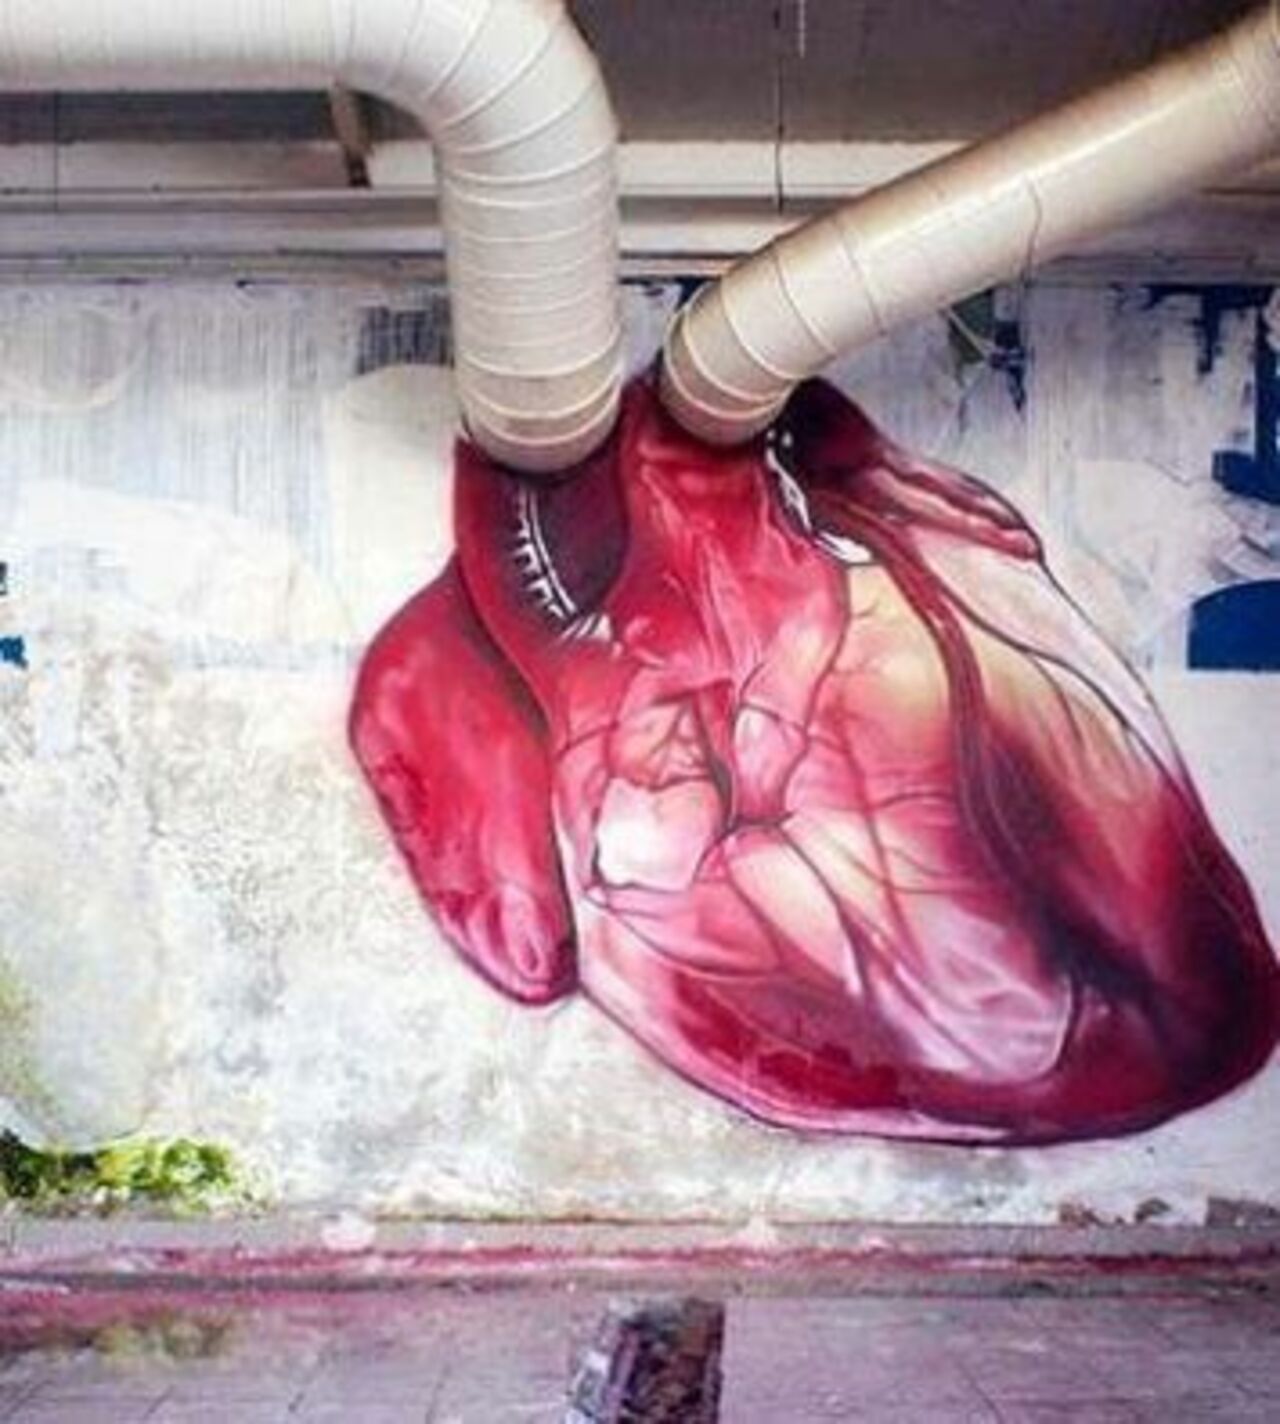 #Heart – Creative #Streetart | Be ▲rtist - Be ▲rt https://beartistbeart.com/2016/08/22/heart-creative-streetart/?utm_campaign=crowdfire&utm_content=crowdfire&utm_medium=social&utm_source=twitter https://t.co/s1ZCCmNXgL